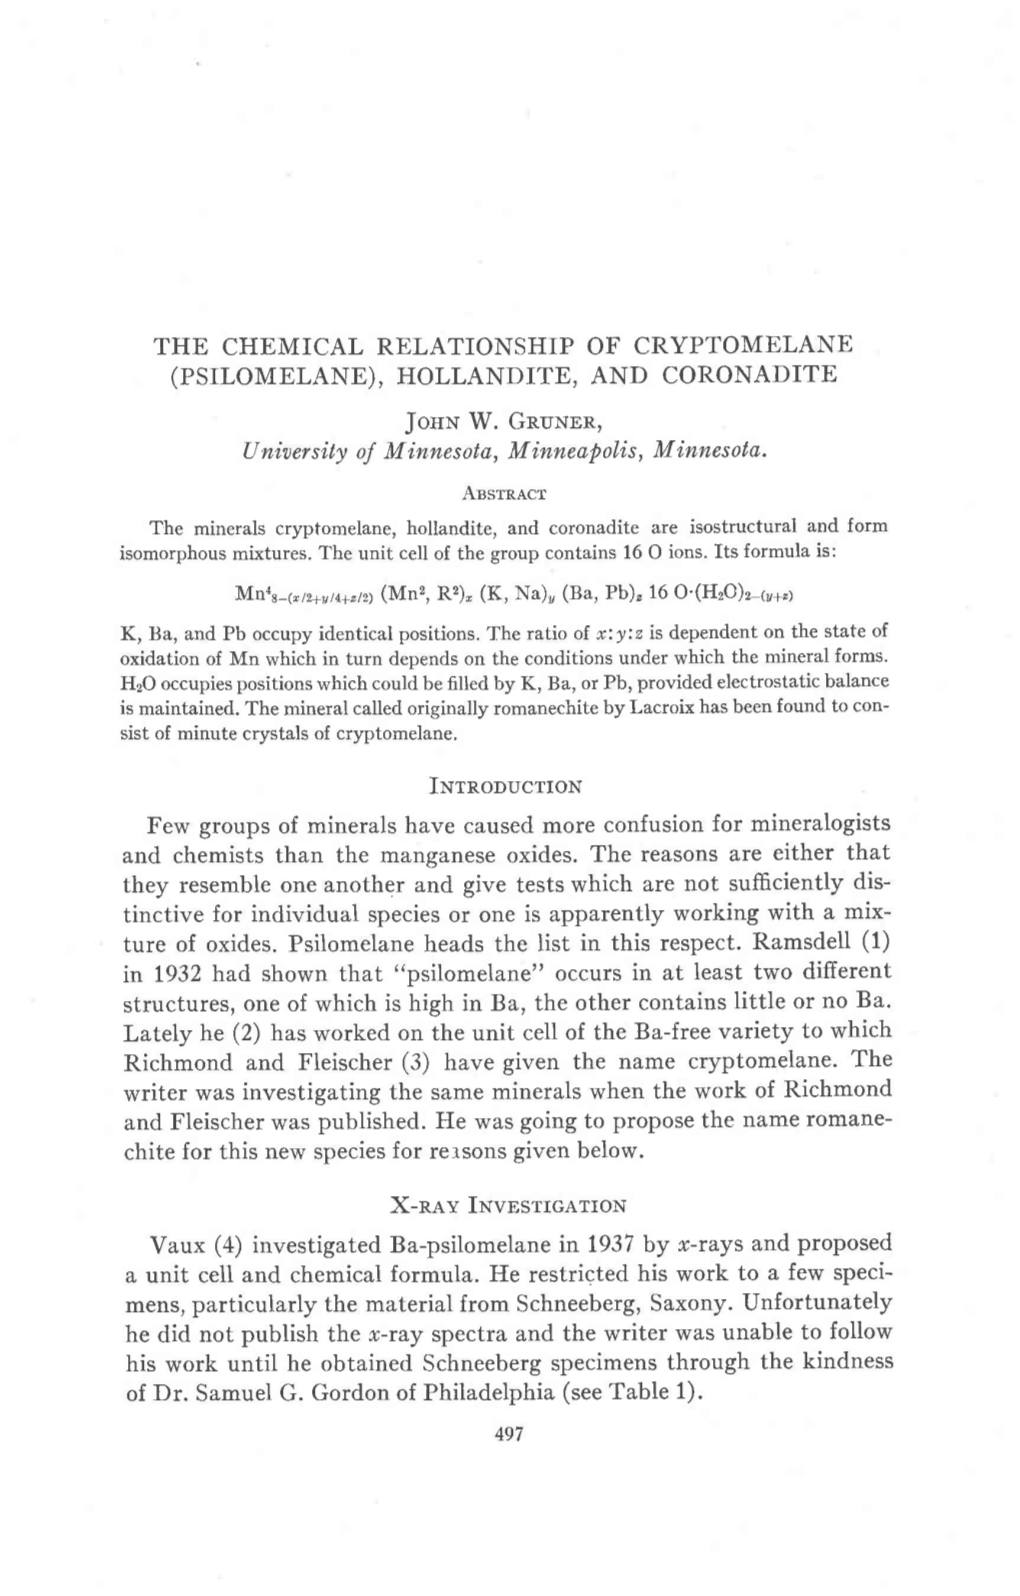 The Chemical Relationship of Cryptomelane (Psilomelane), Hollandite, and Coronadite